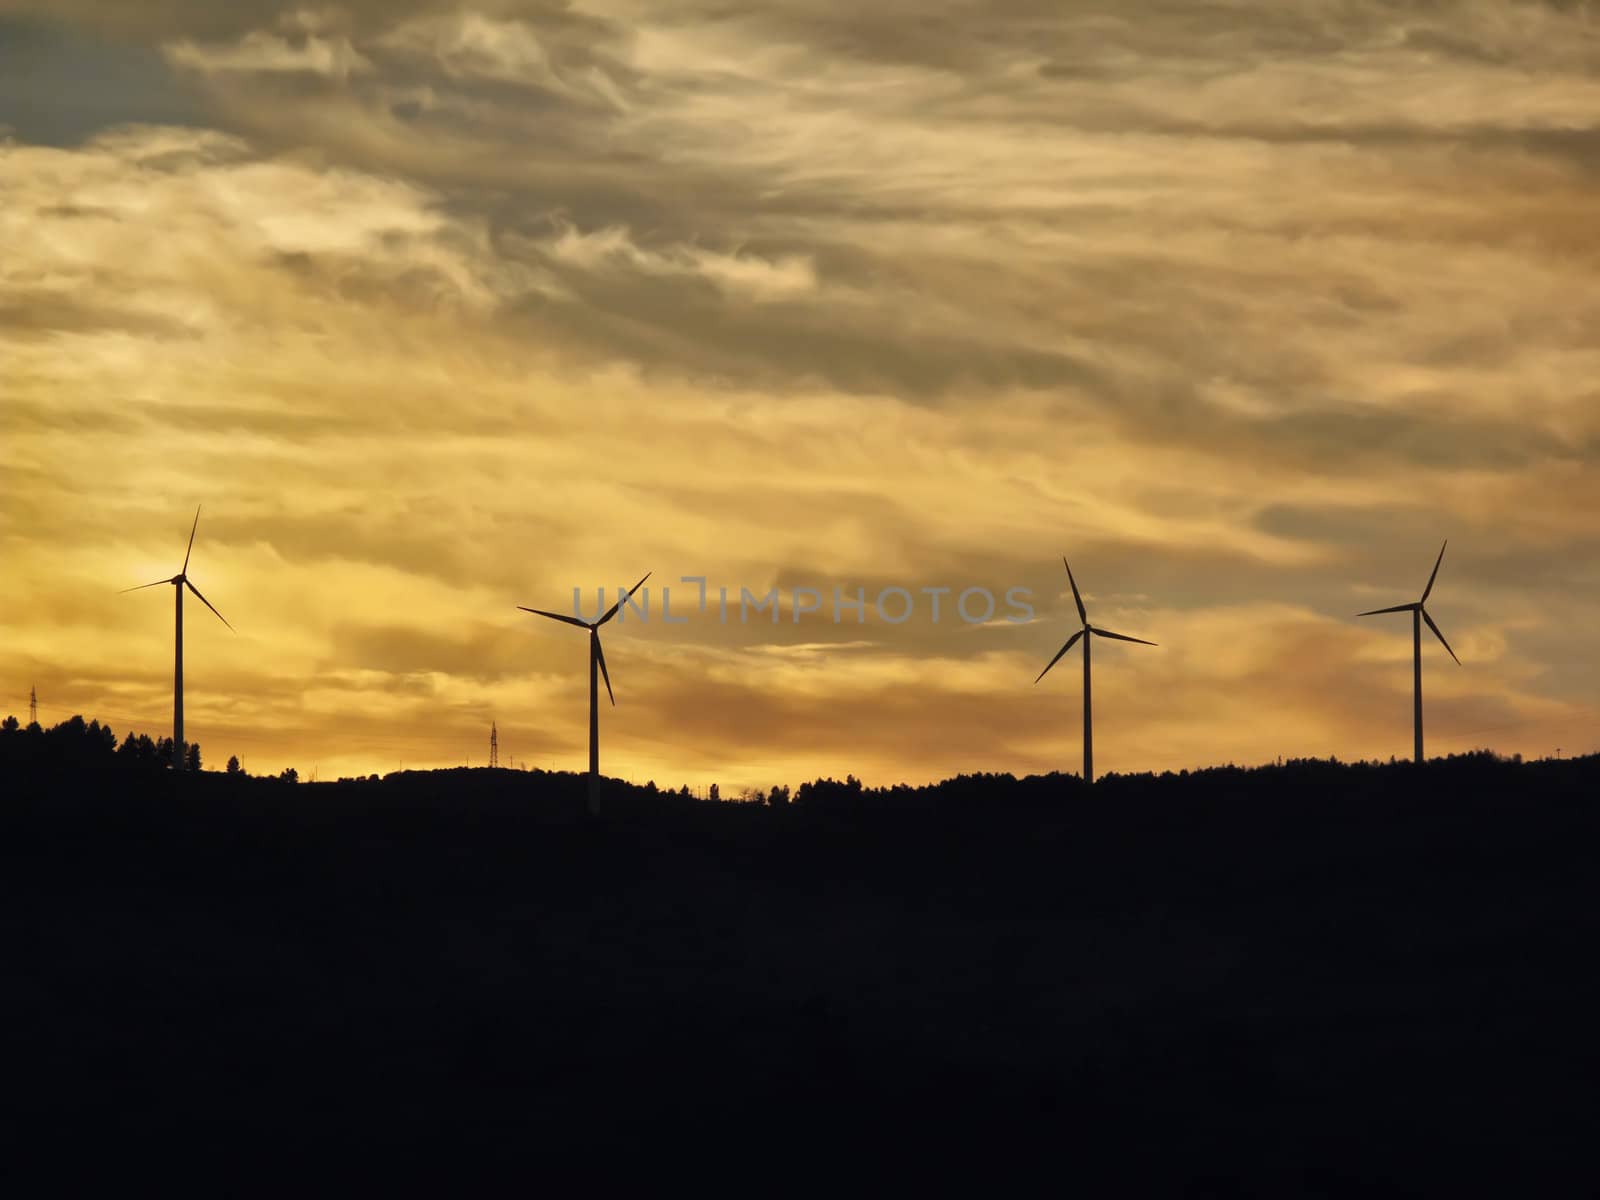 ITALY, Campania, Salerno, countryside, Eolic energy turbines by agiampiccolo